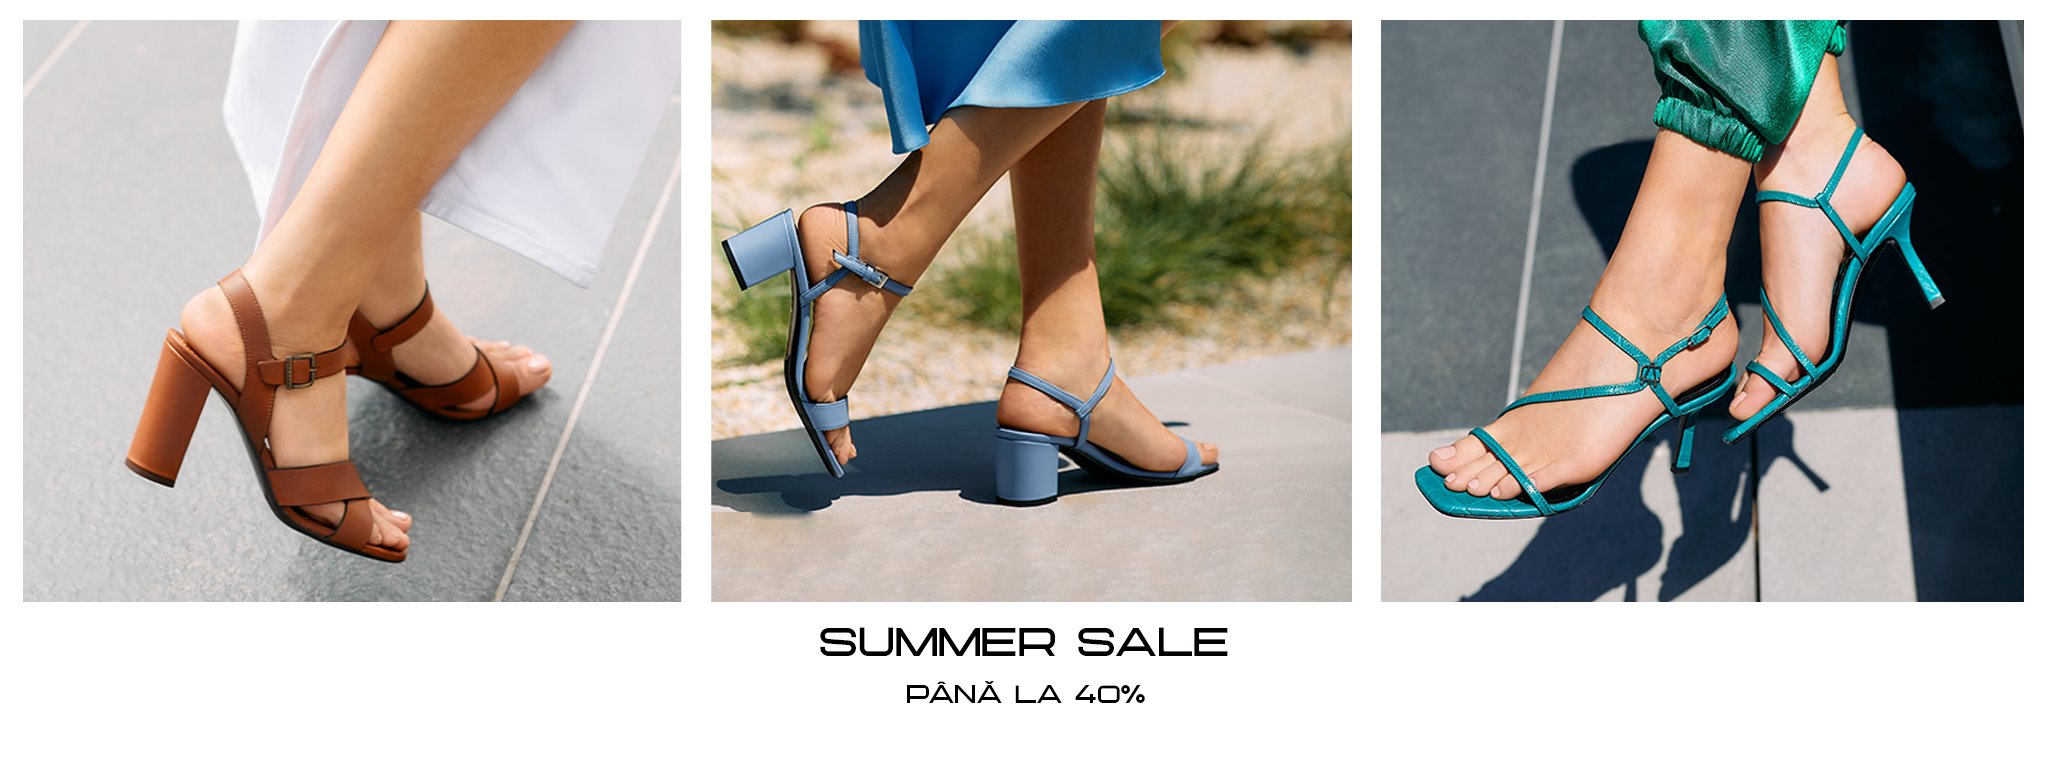 Summer Sale la Anna Cori; reduceri de pana la 40%